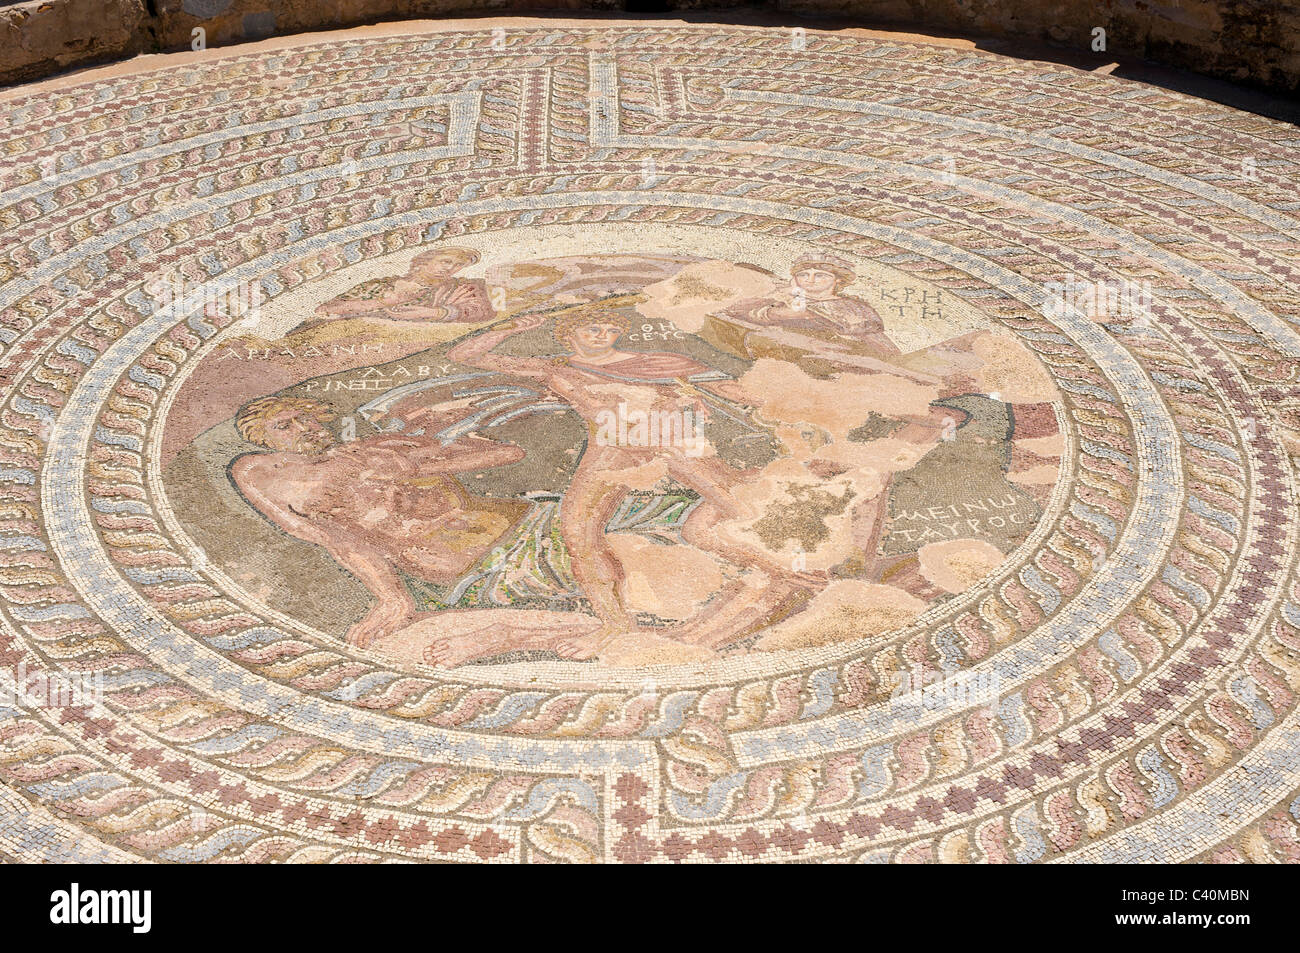 South Cyprus, Cyprus, Europe, mosaic, Mosaike, fresco, frescoes, art, art craft, place of interest, landmark, tourist attraction Stock Photo